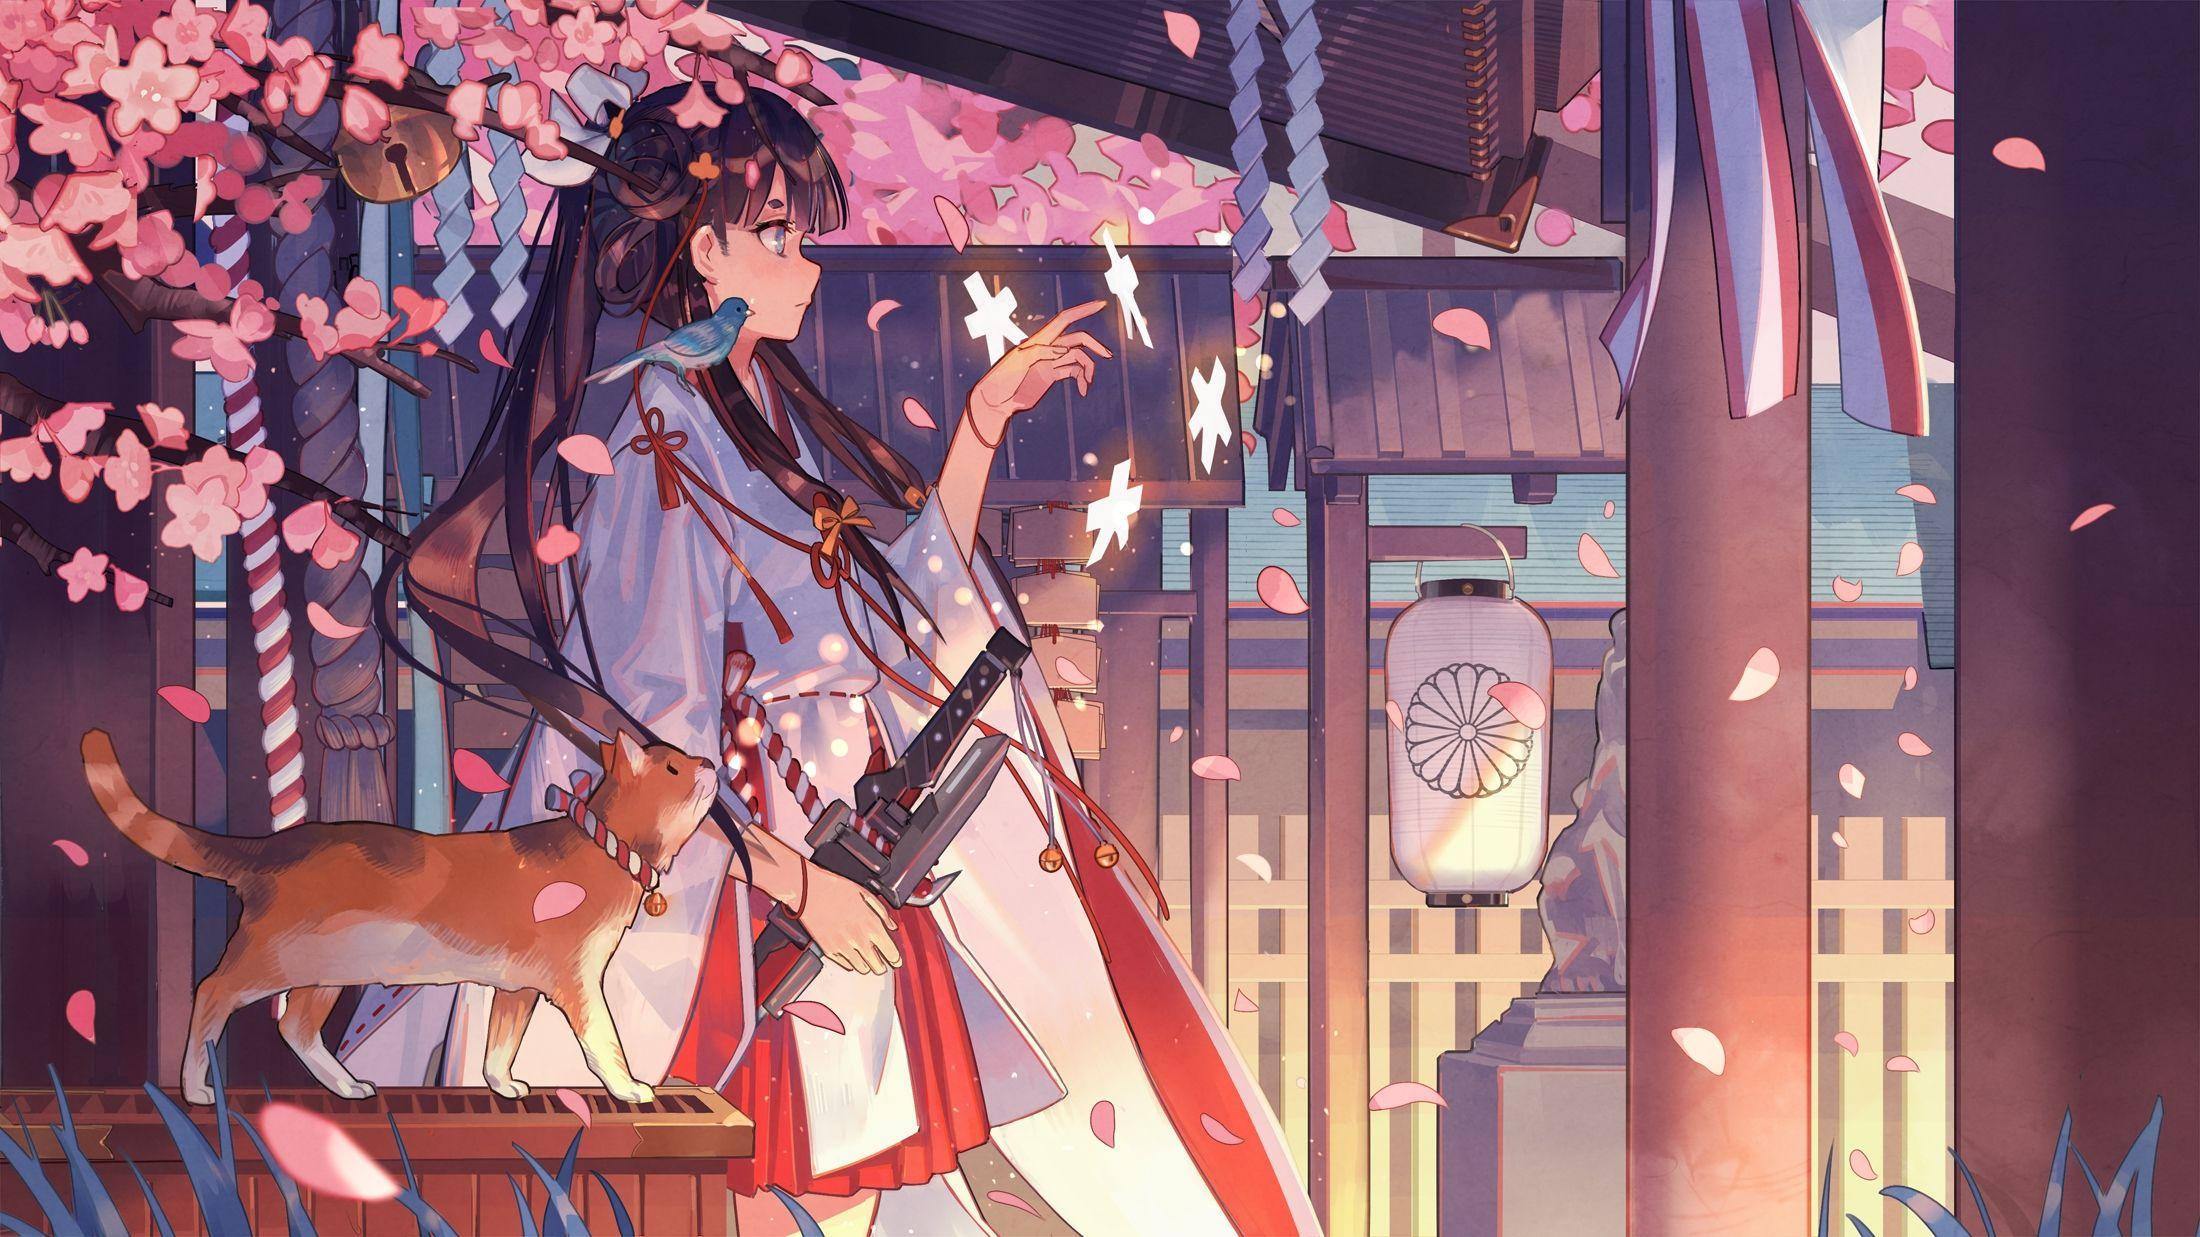 Wallpaper Anime Girl, Kimono, Katana, Sakura Blossom, Profile View